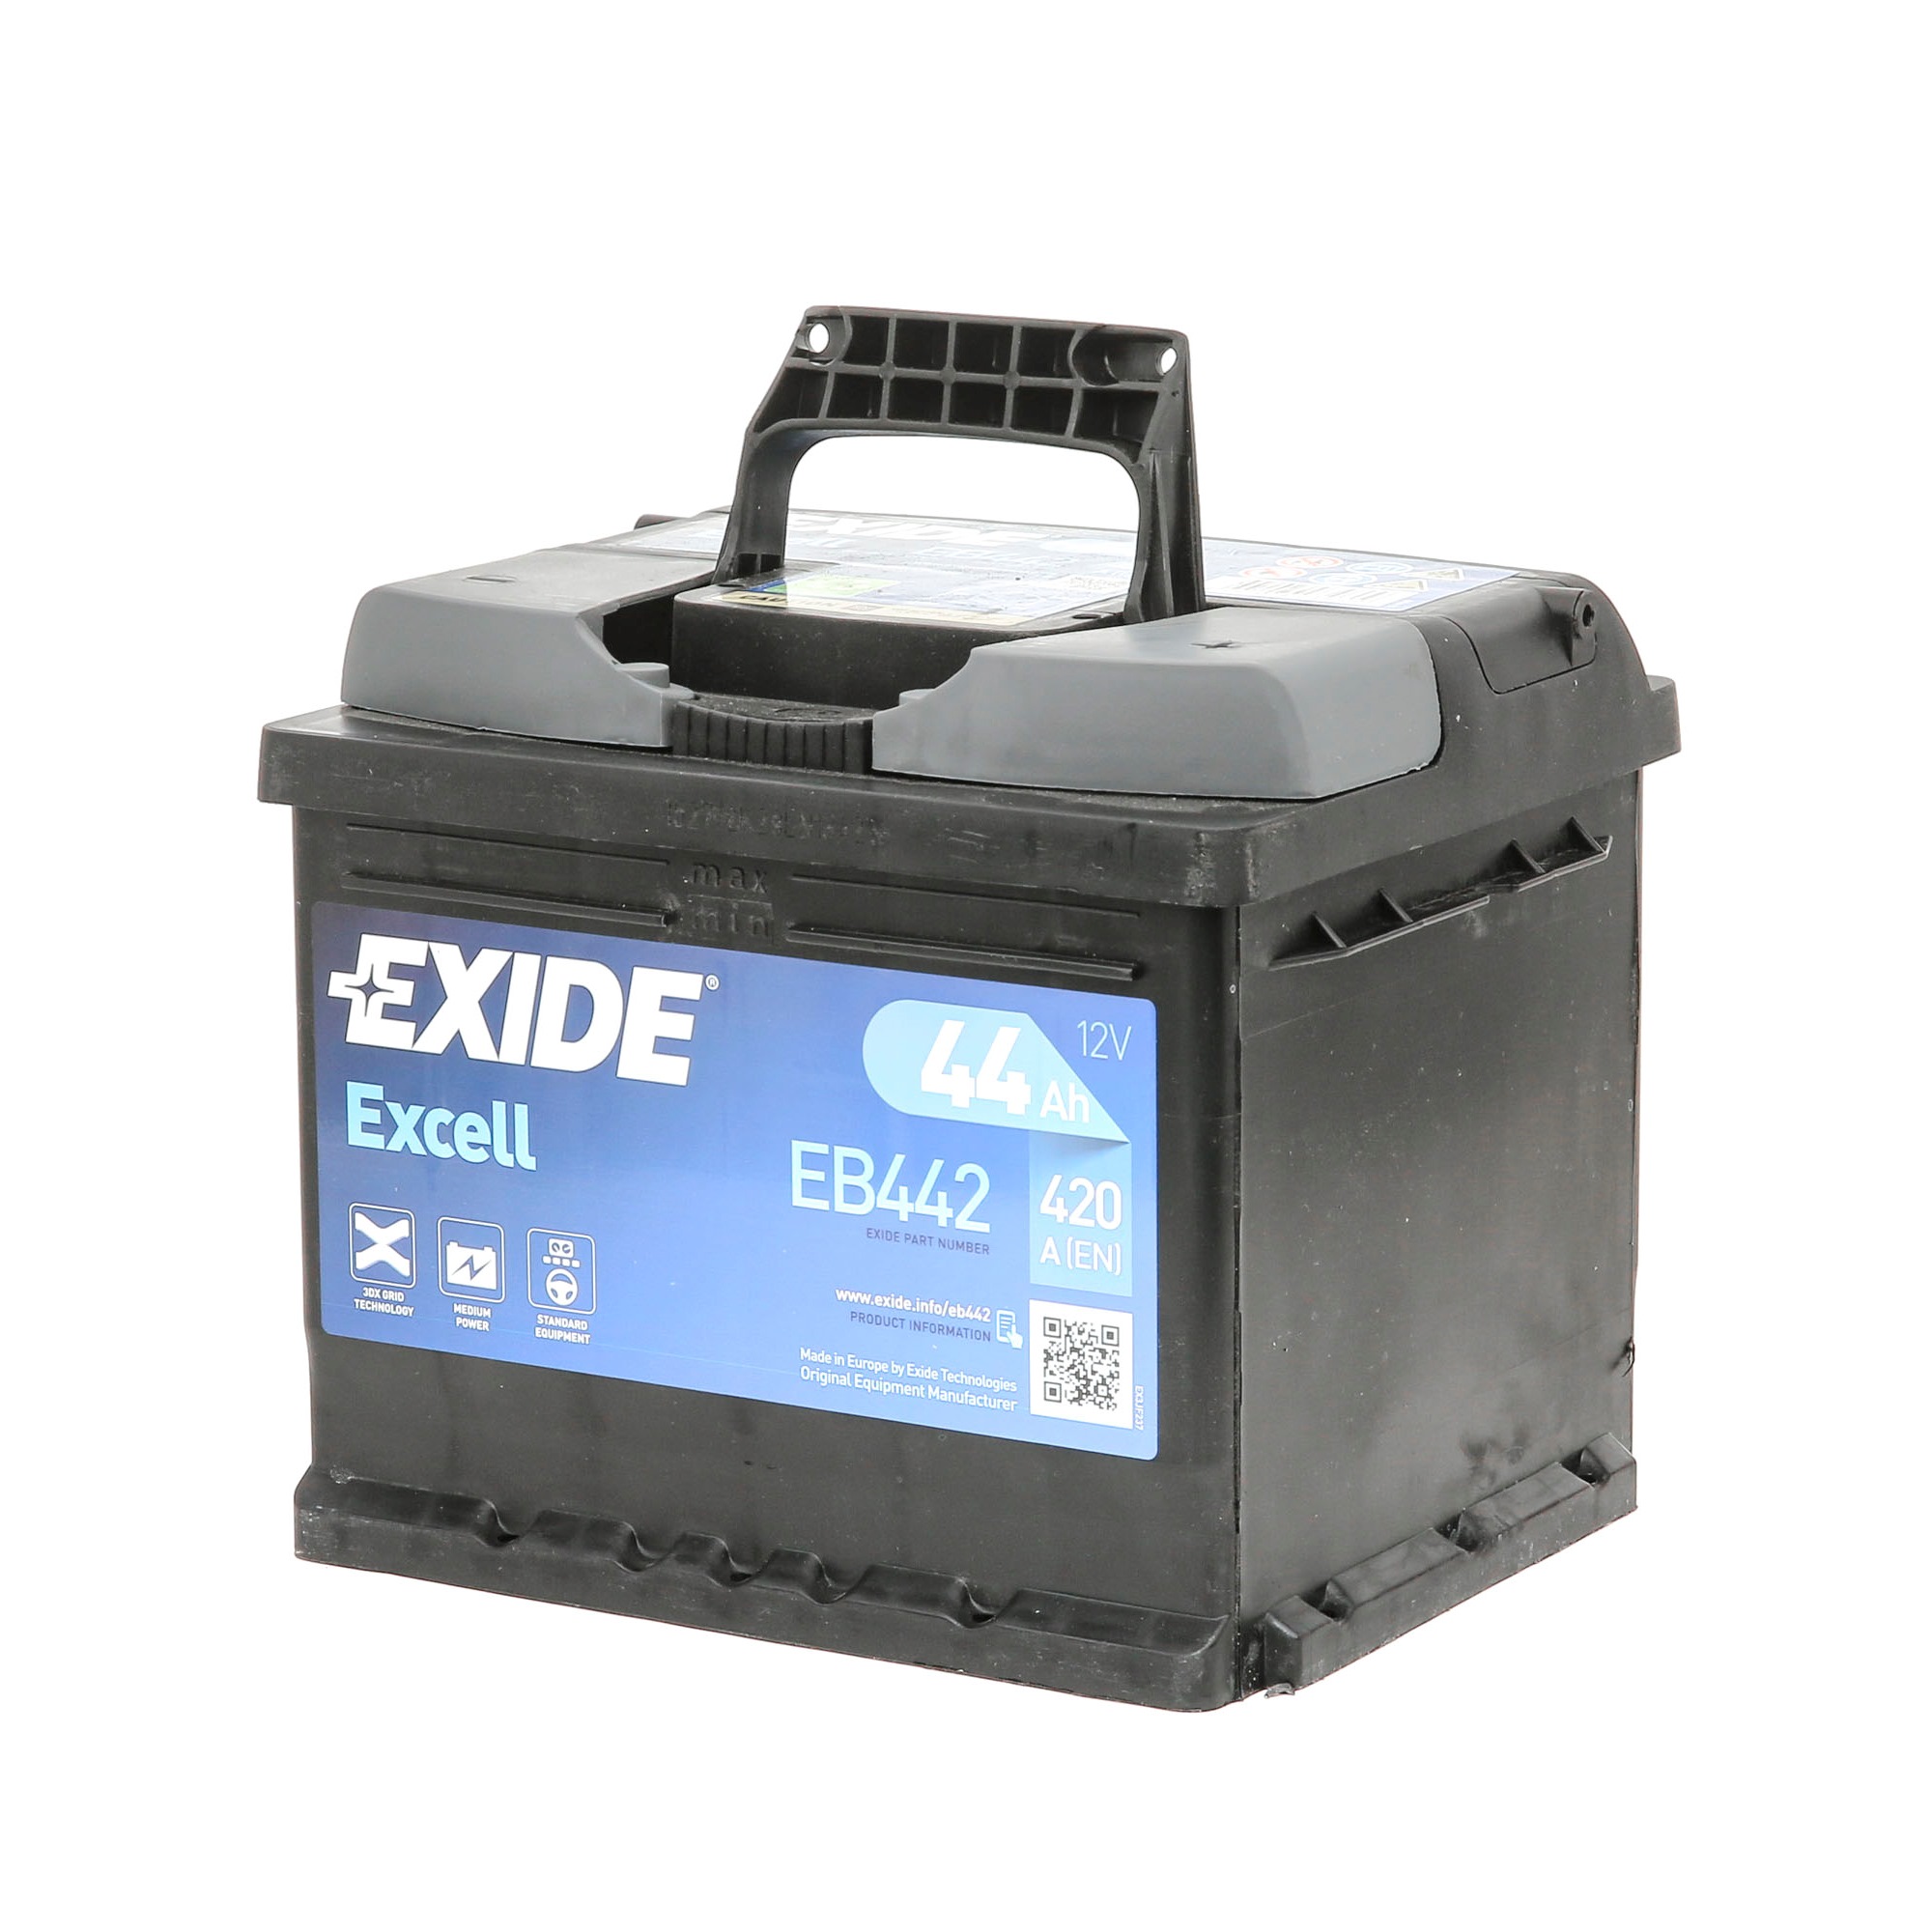 Original EXIDE Starterbatterie EB442 für AUDI 80